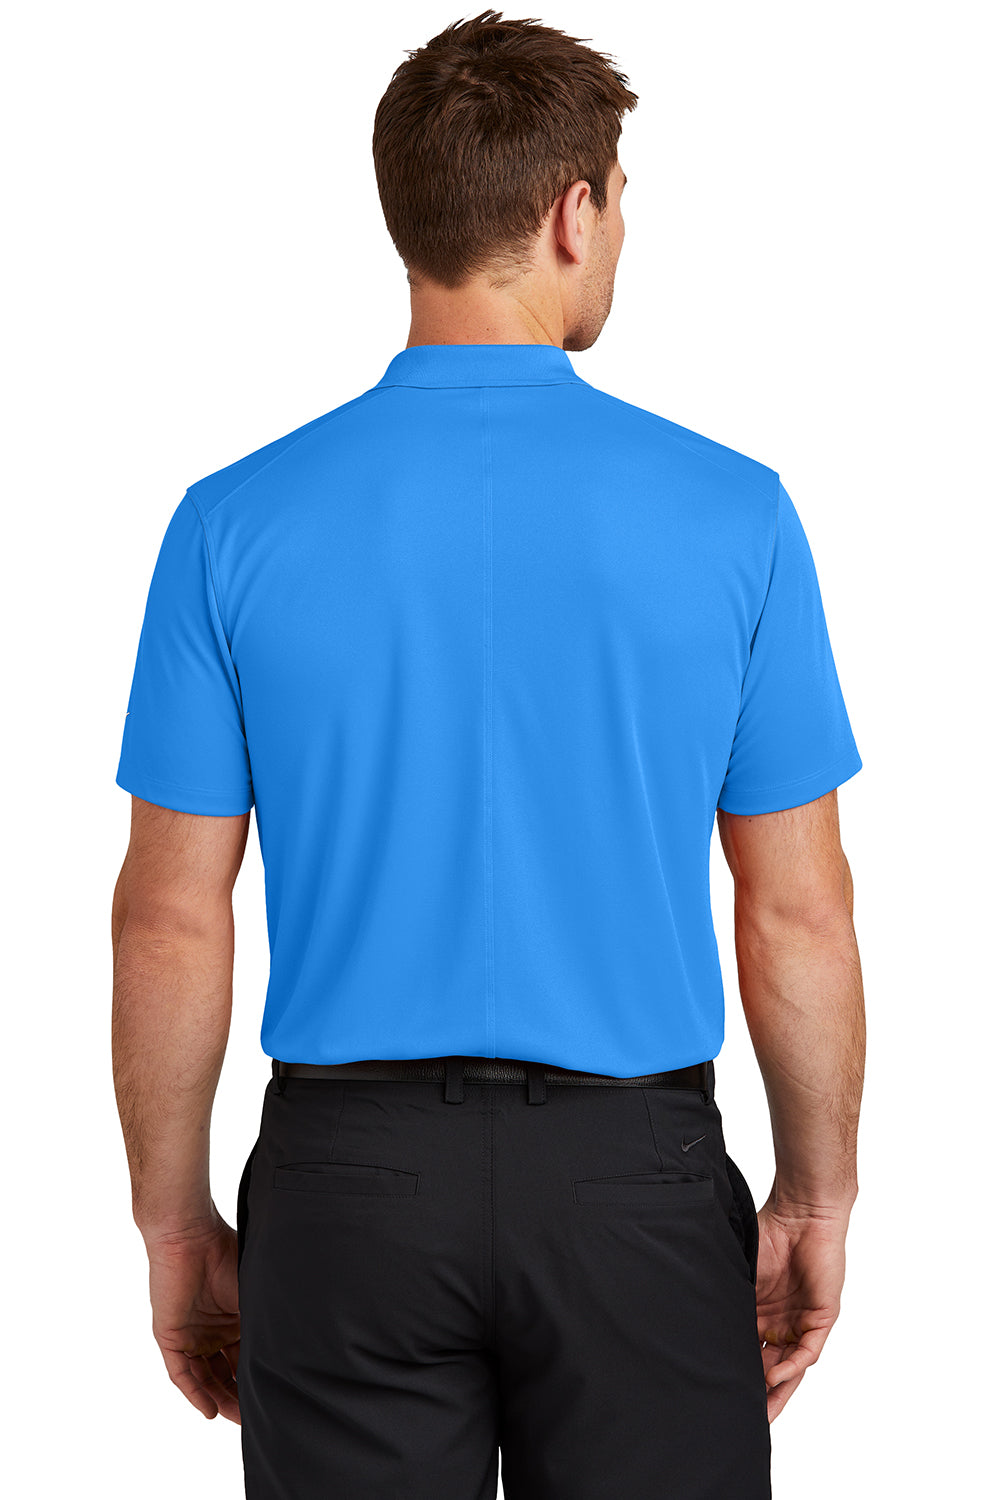 Nike NKDX6684 Mens Victory Dri-Fit Moisture Wicking Short Sleeve Polo Shirt Light Photo Blue Model Back